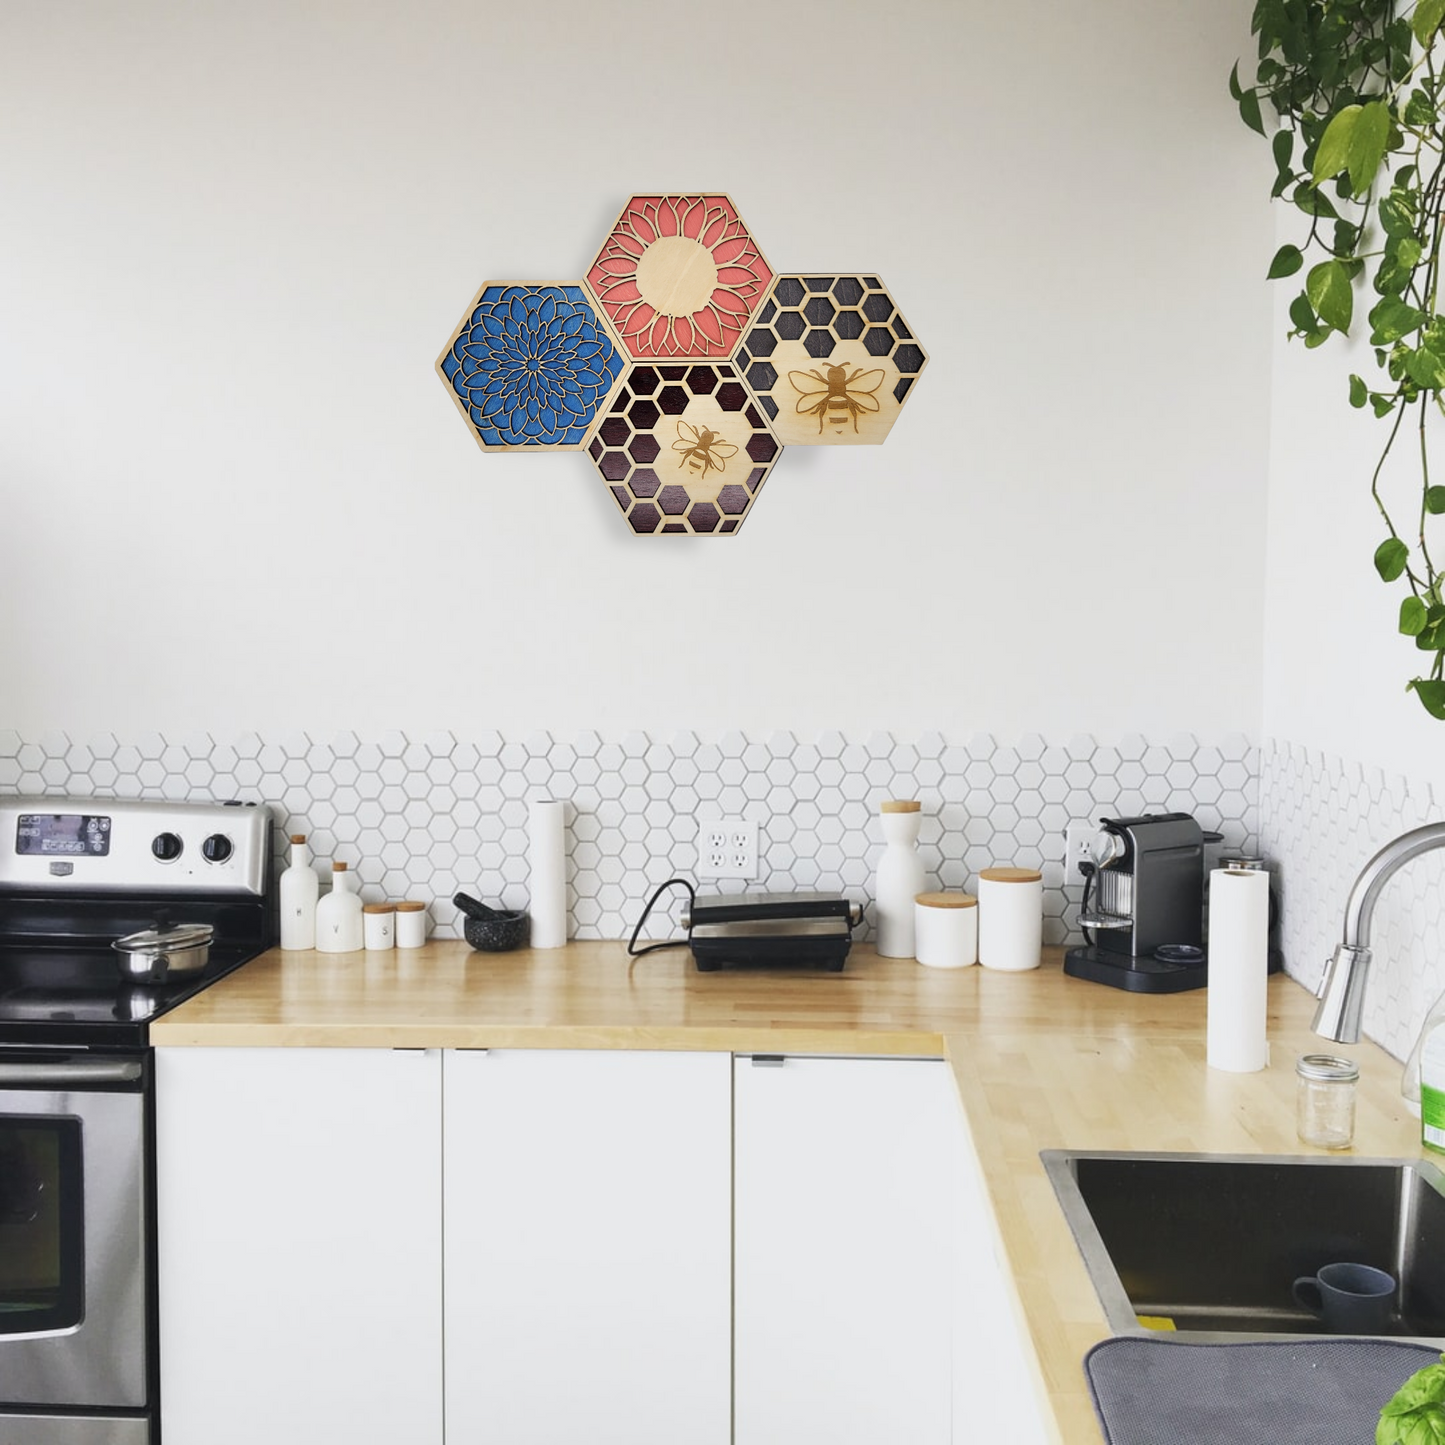 Home Decor Honeybee Wall Tiles - Set of 4 | Jones Laser Craft Personalized Gift